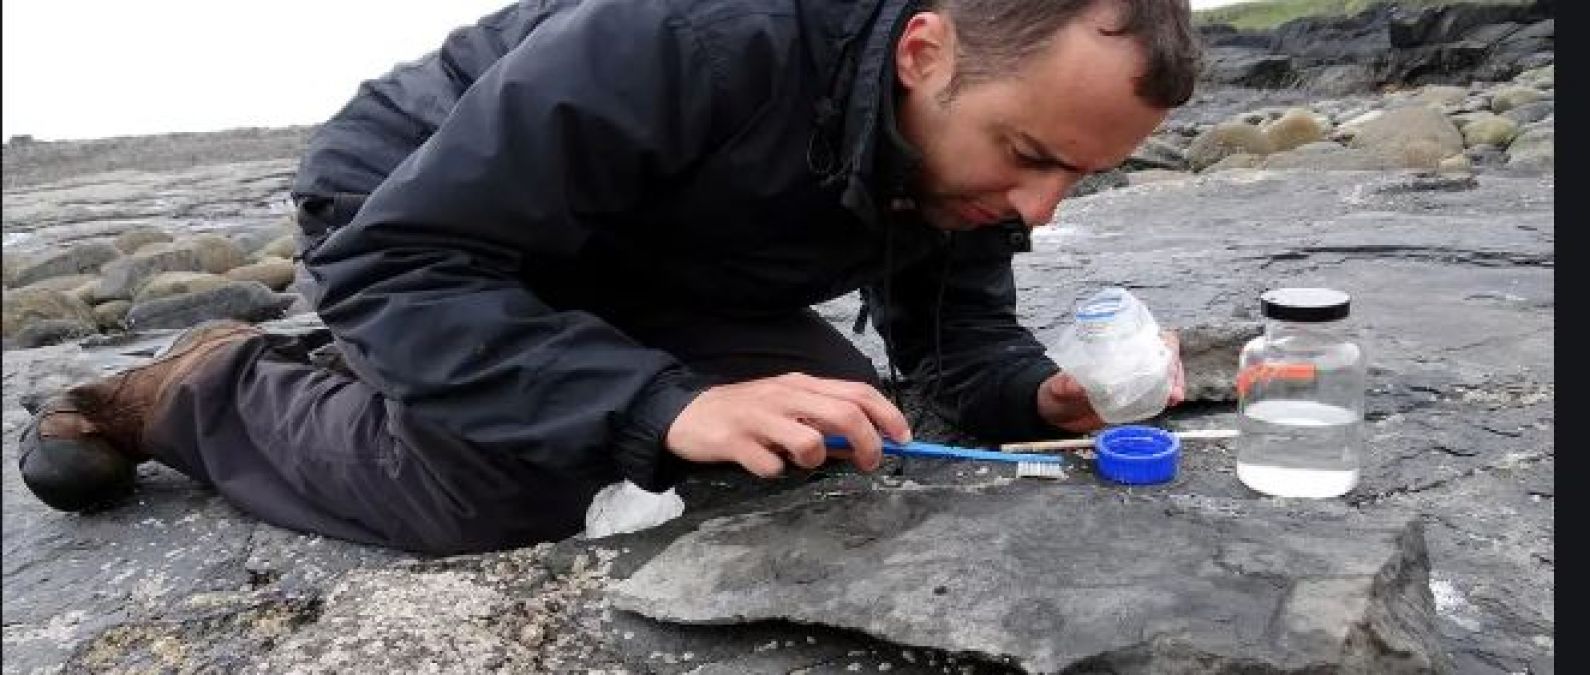 160 million-year-old flying lizard found inside rock here!